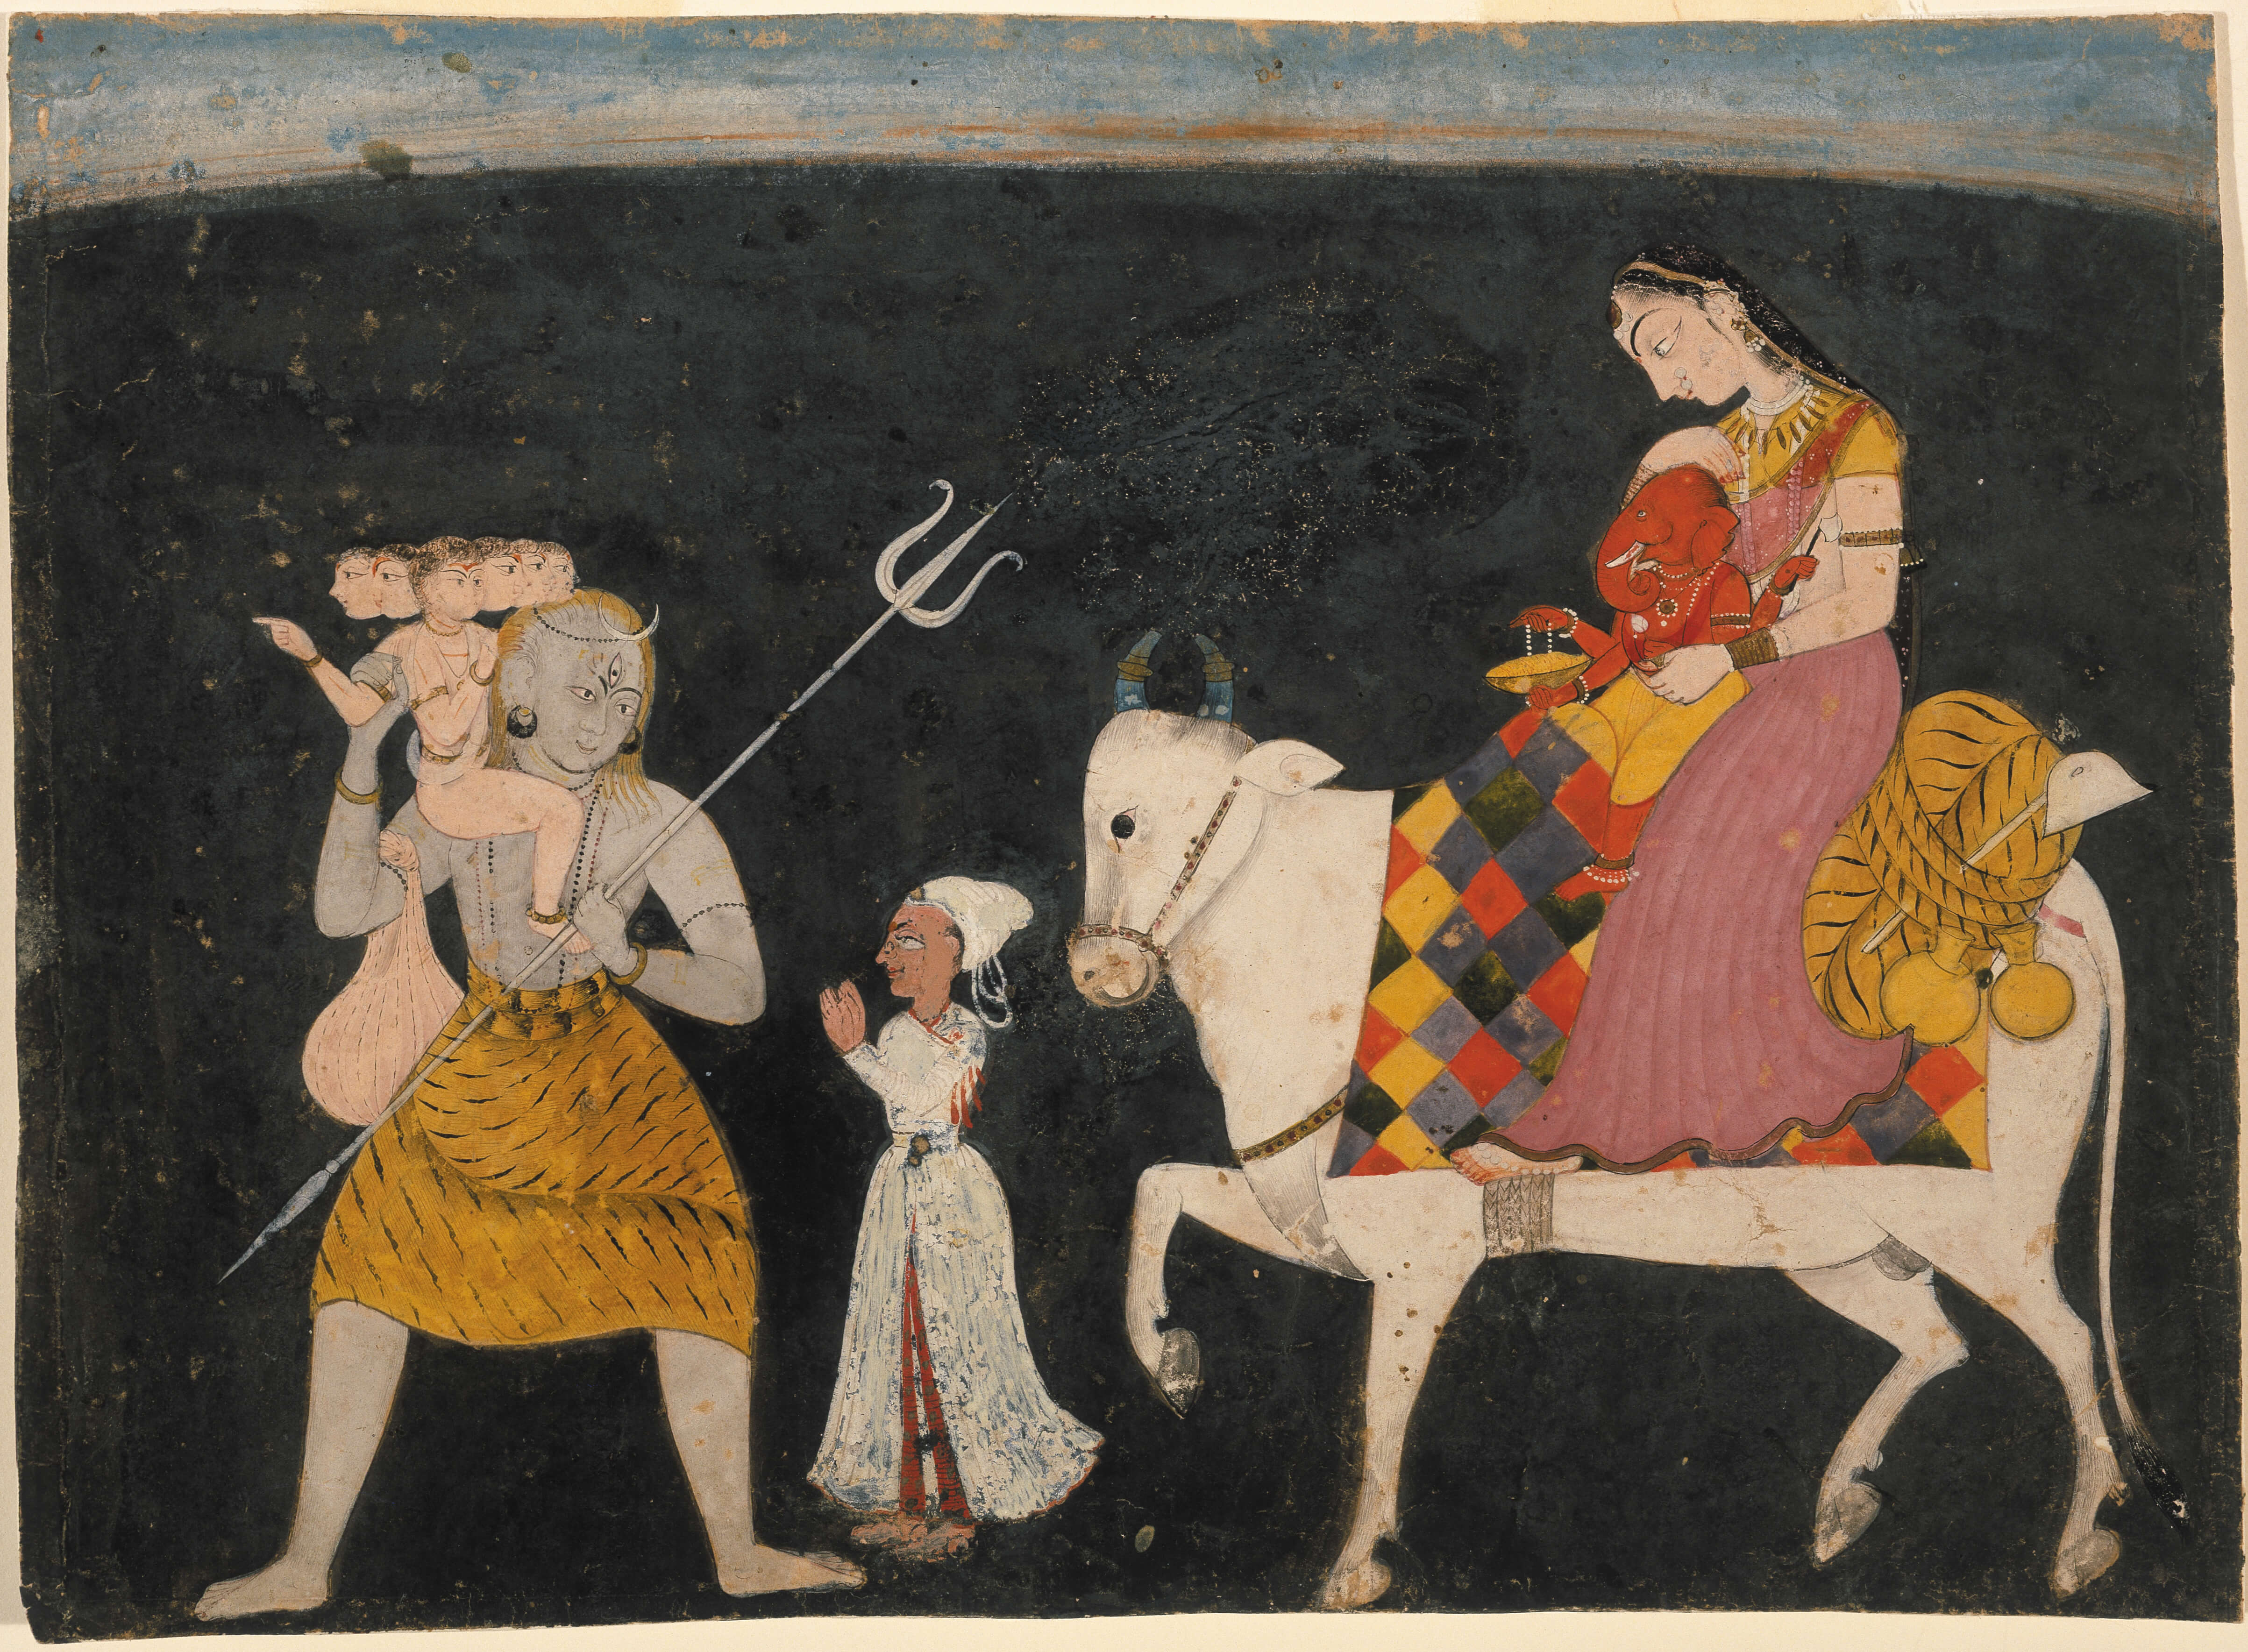 Artwork: Shiva, Parvati, Kartiklyya and Ganesha Traveling 